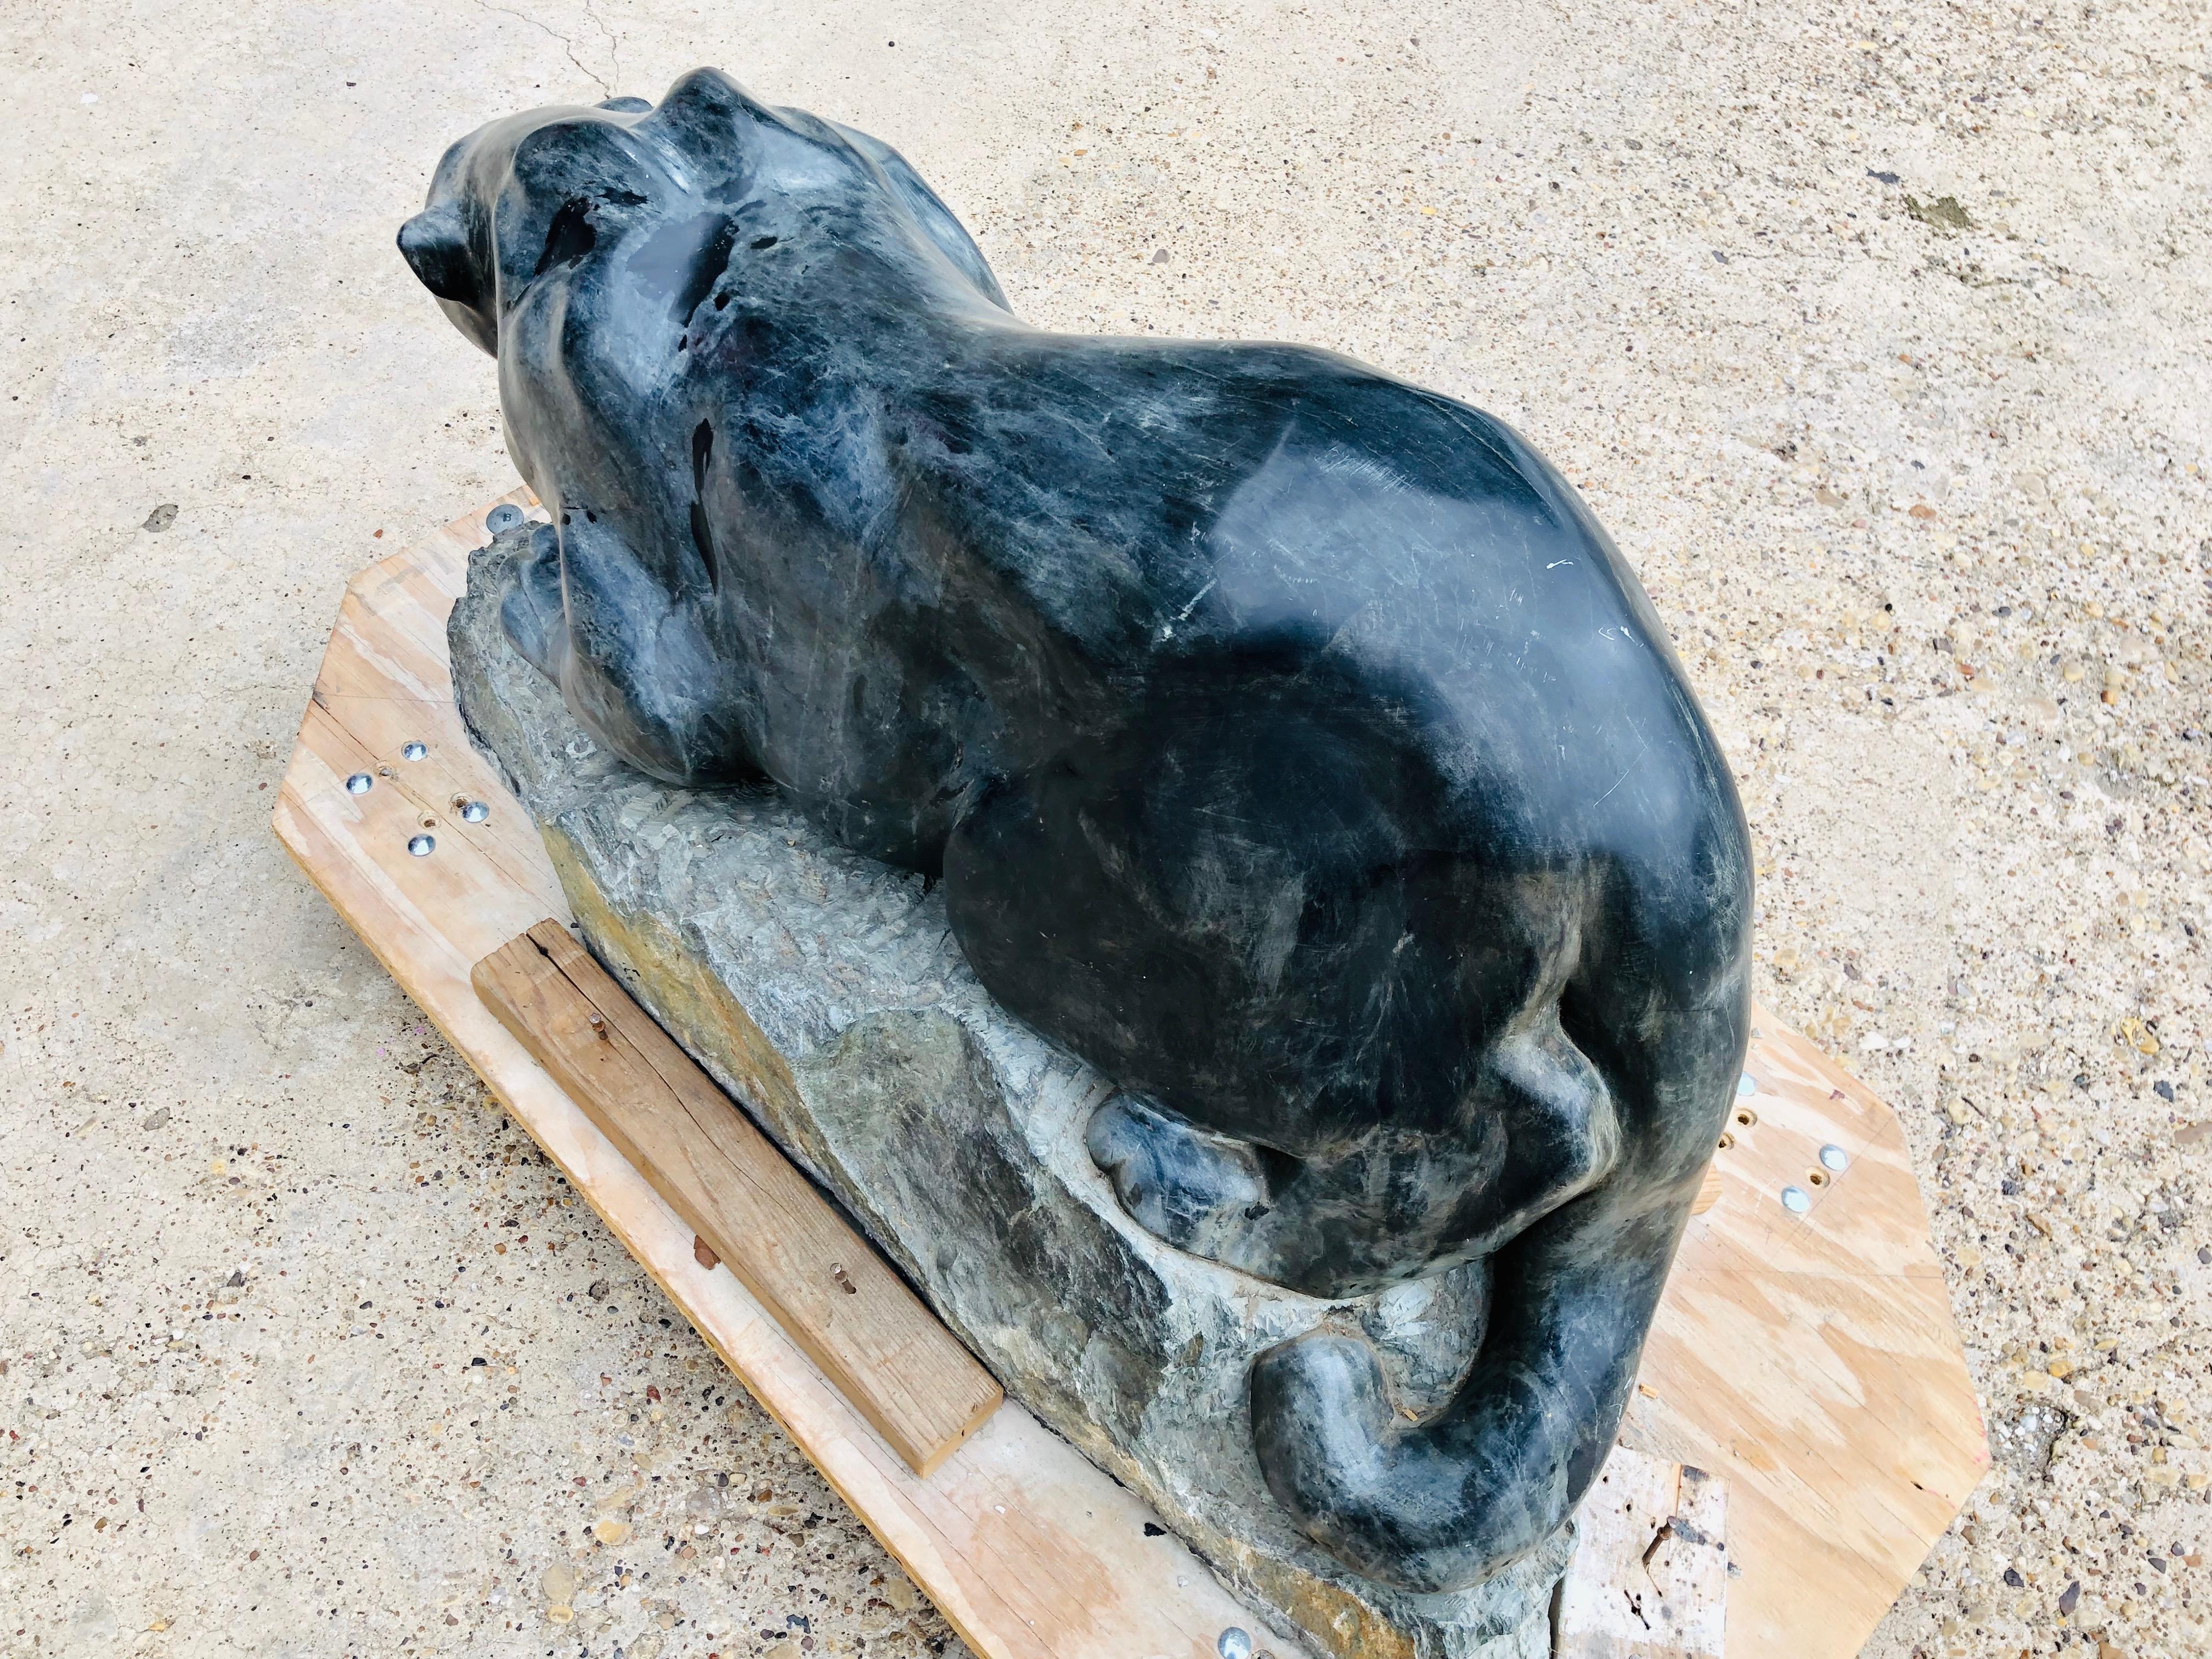 cougar sculpture